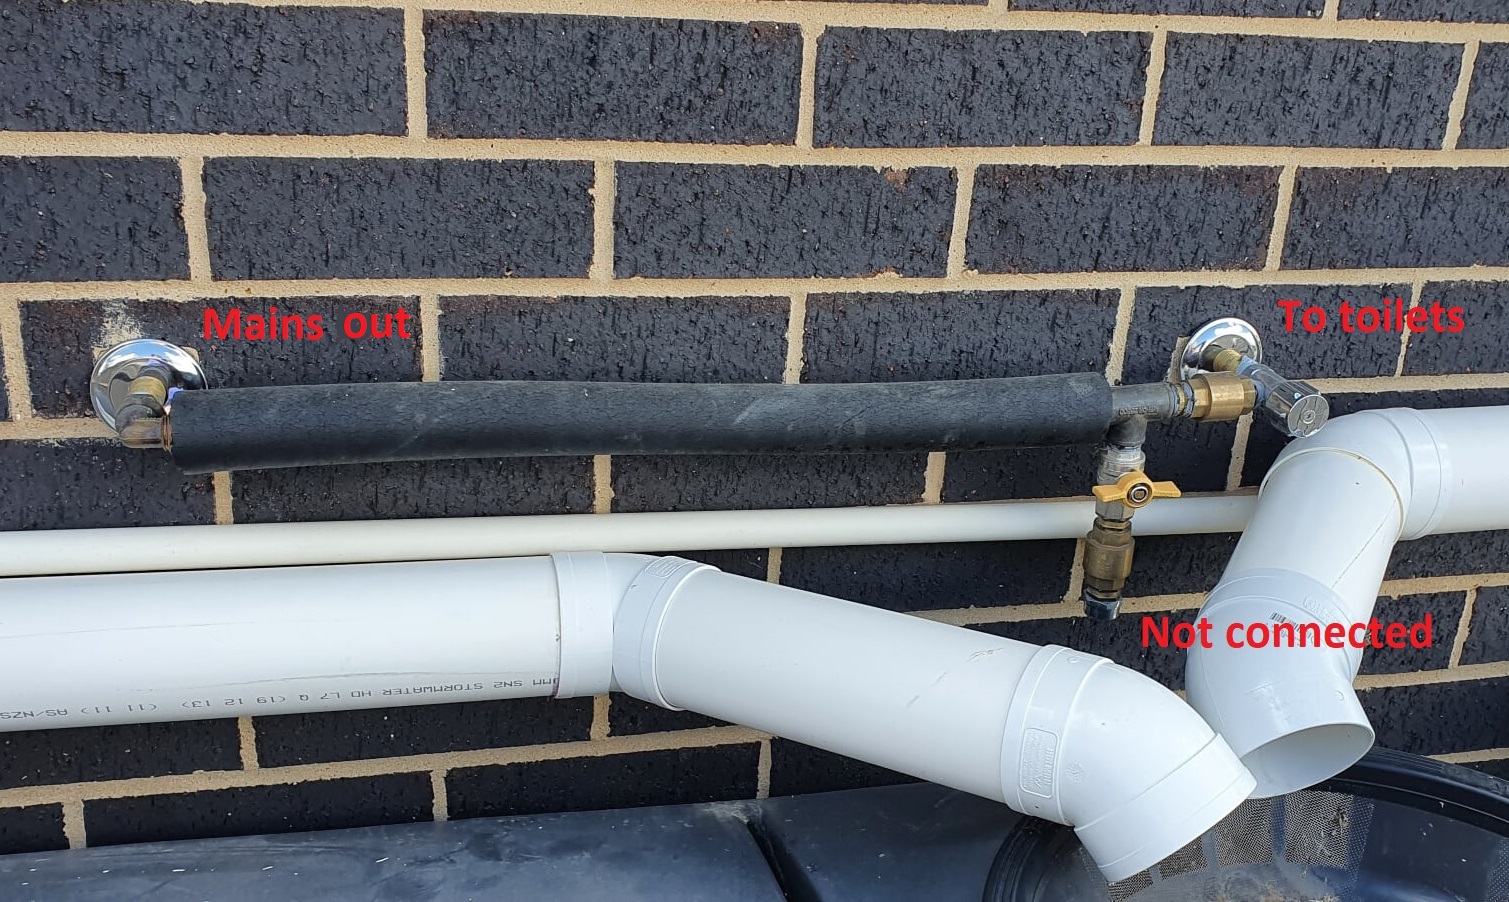 Rainwater tank water / Mains plumbing question